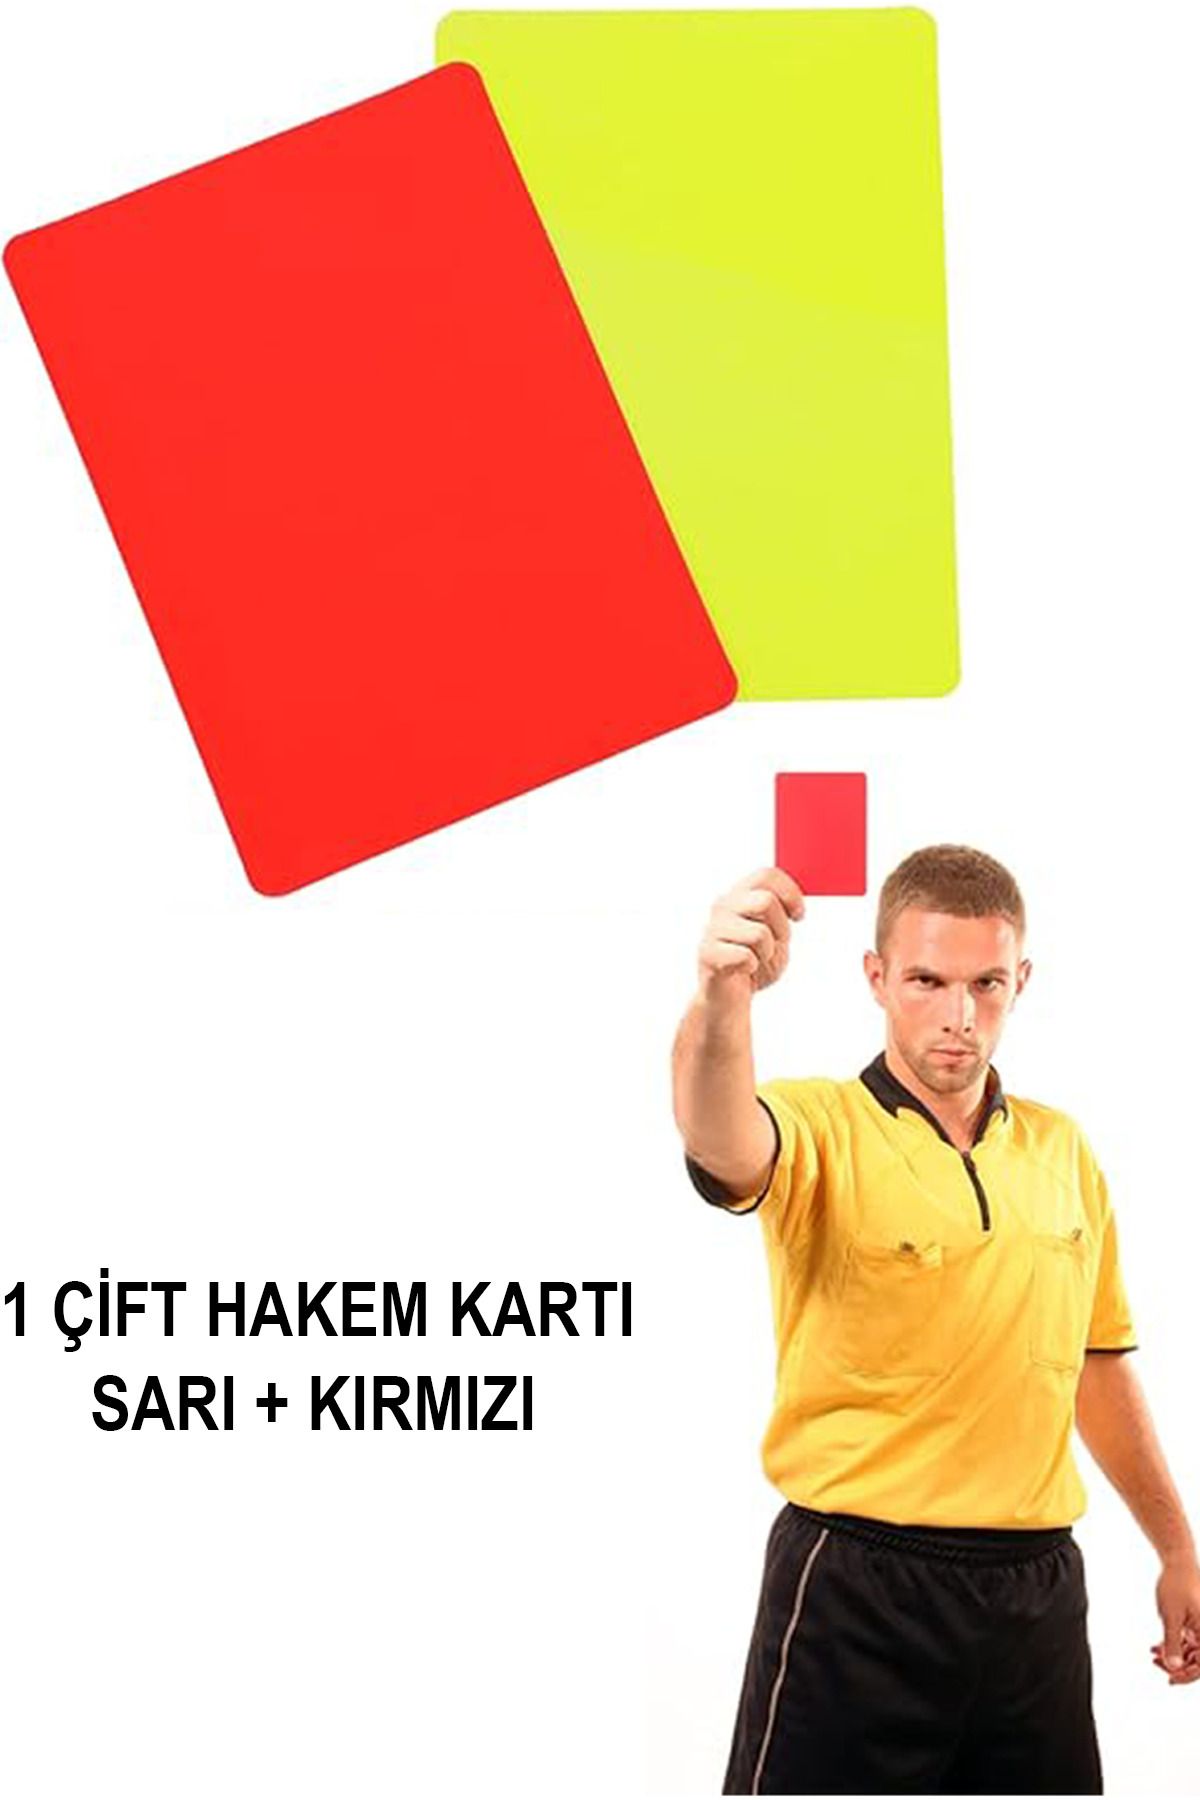 GAZELMANYA Futbol Hakem Kartı Profesyonel Hakem Kartı Sarı Ve Kırmızı Kart Hakem Kartı Referee Cards Kit